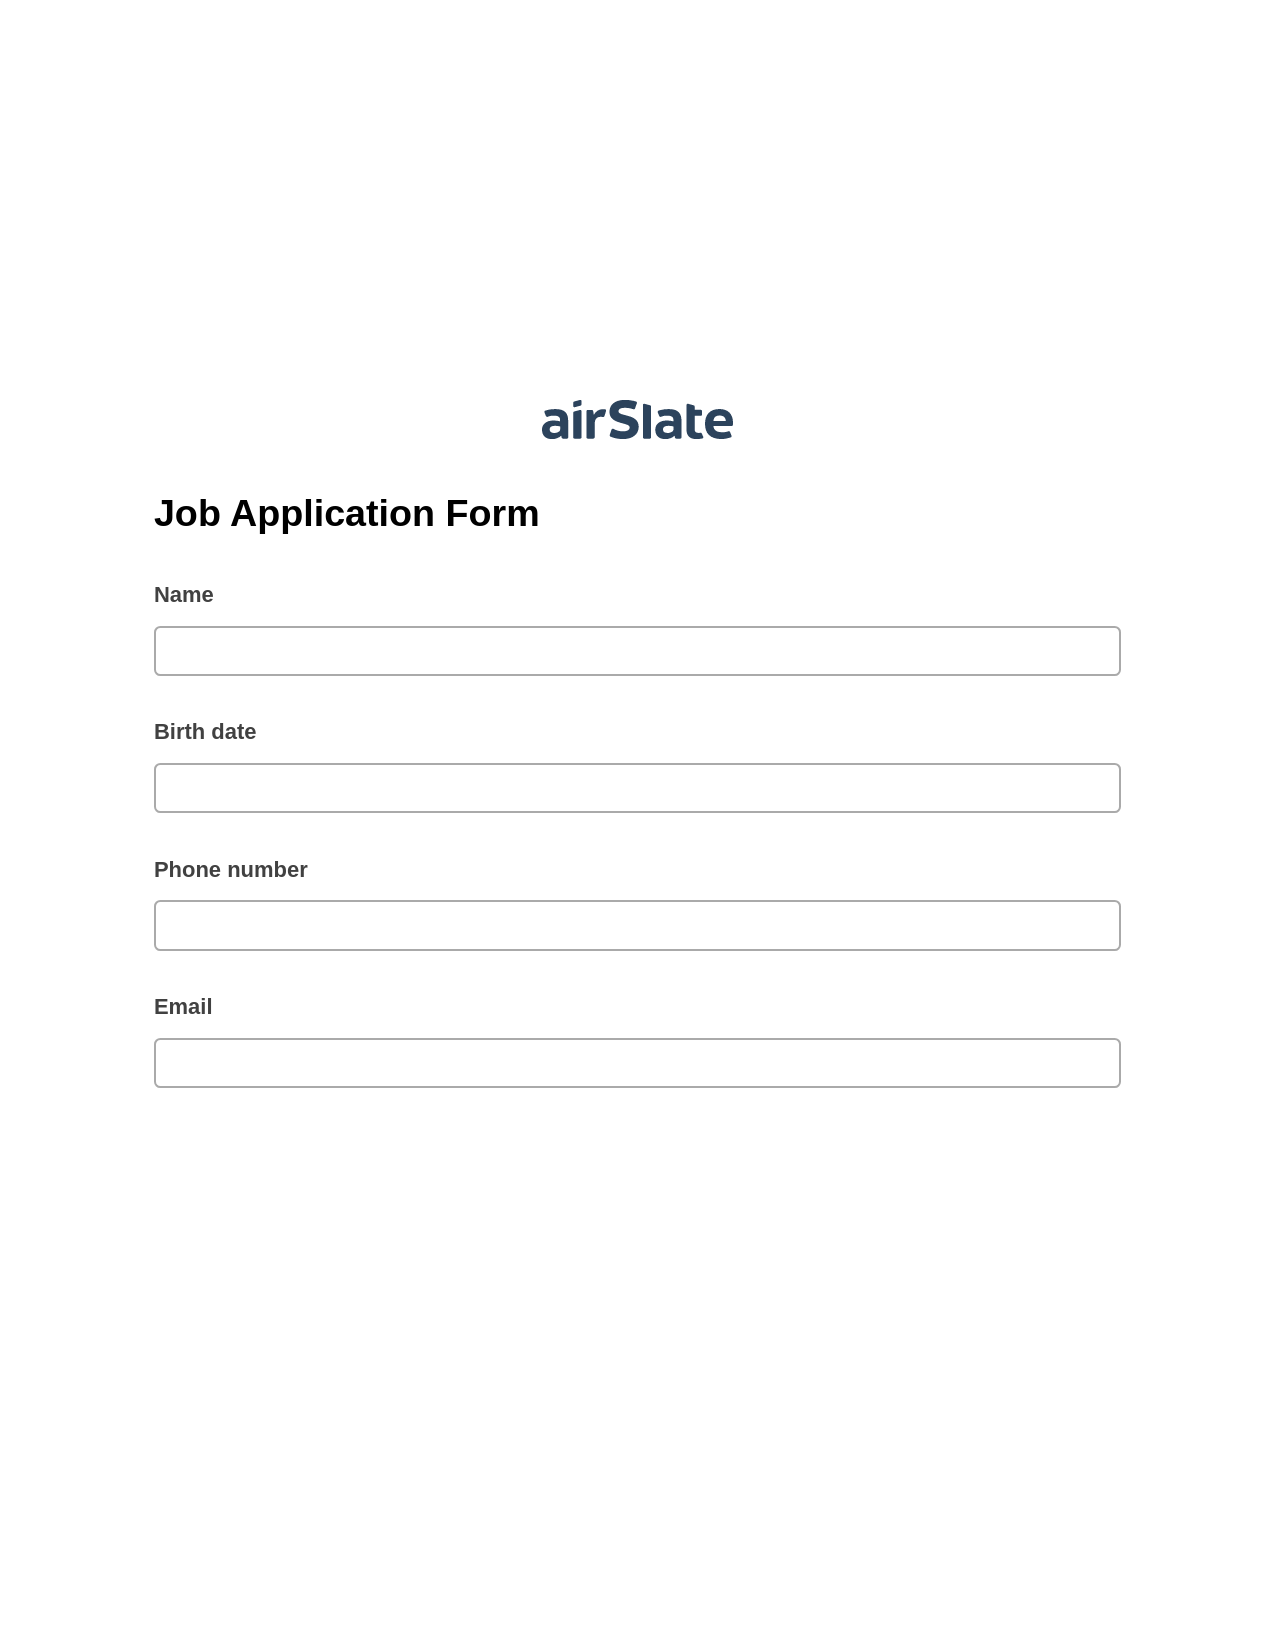 Multirole Job Application Form Pre-fill from CSV File Dropdown Options Bot, Google Cloud Print Bot, Export to MySQL Bot